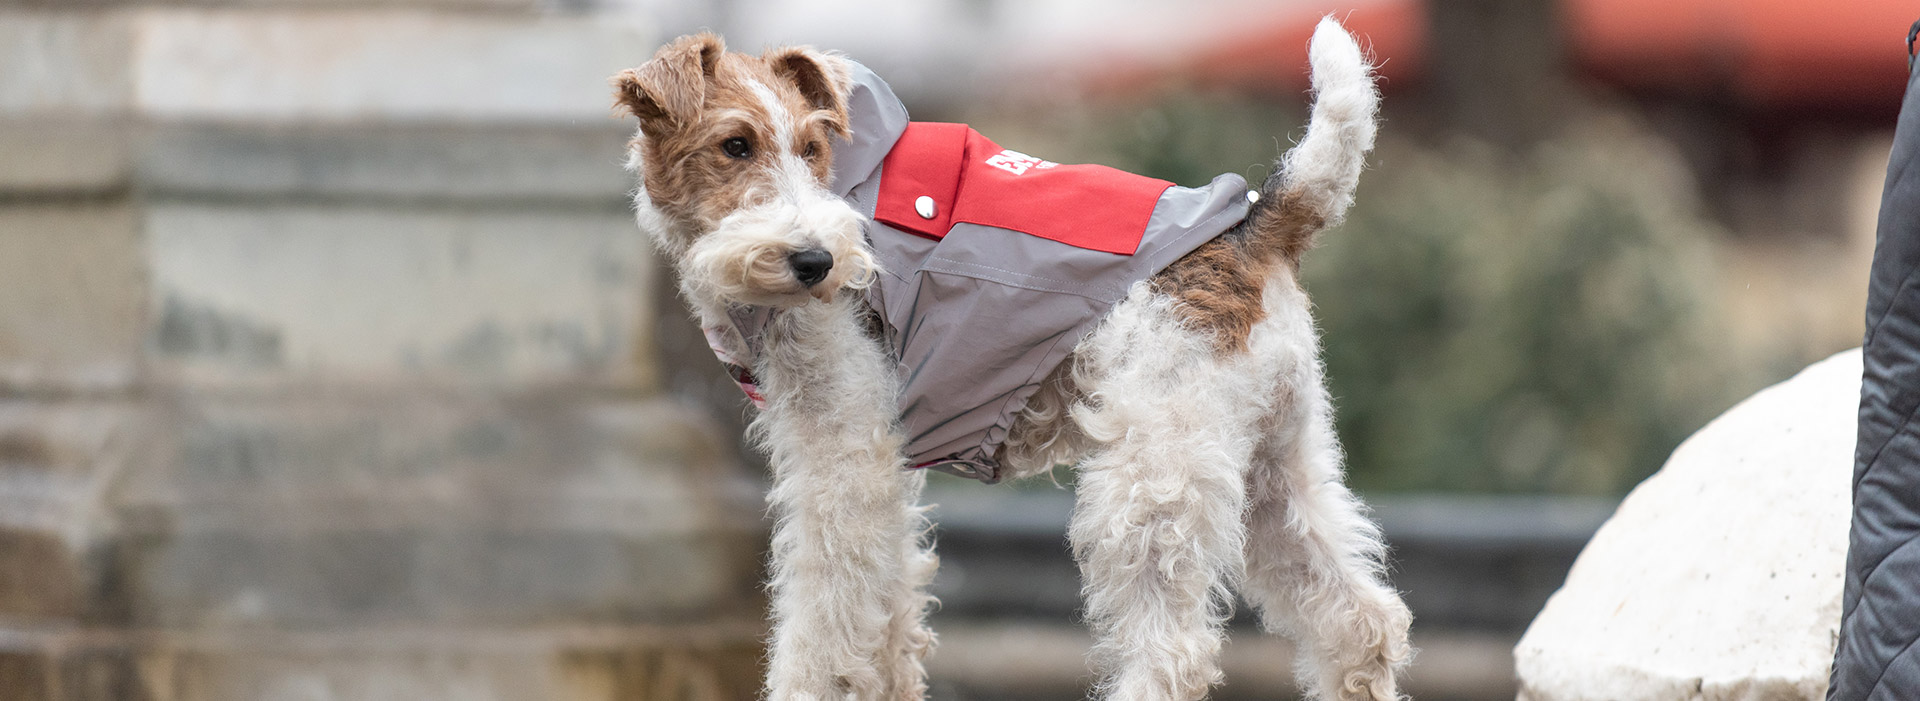 EmmaFirenze dog raincoats